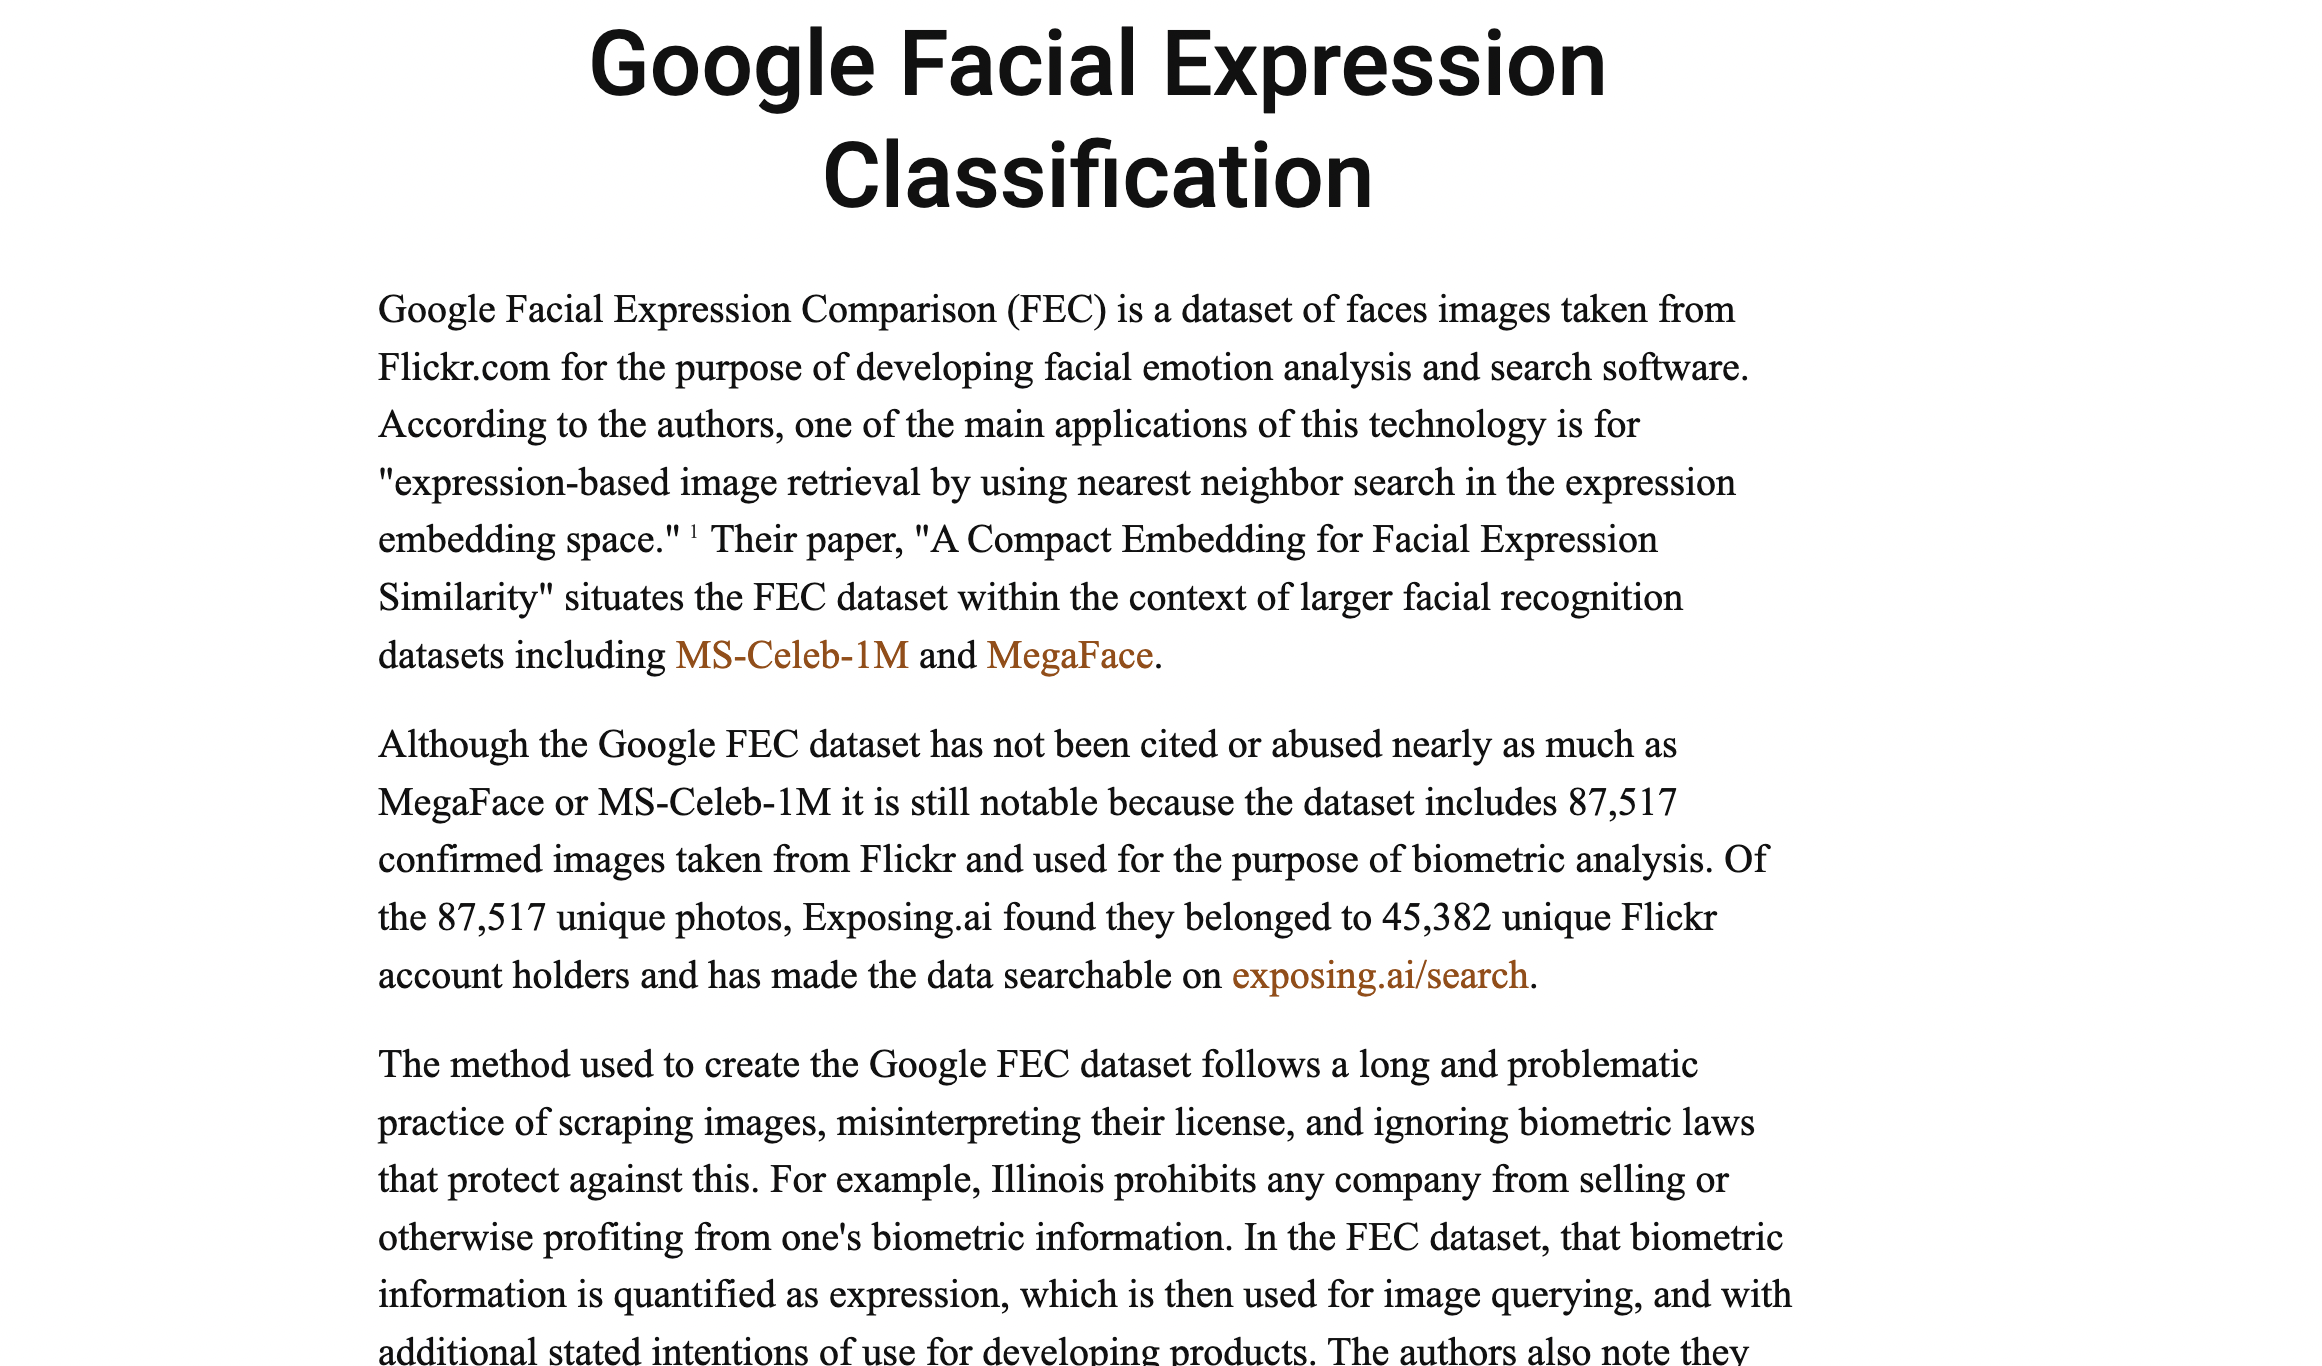 Google Facial Expression Comparison Dataset